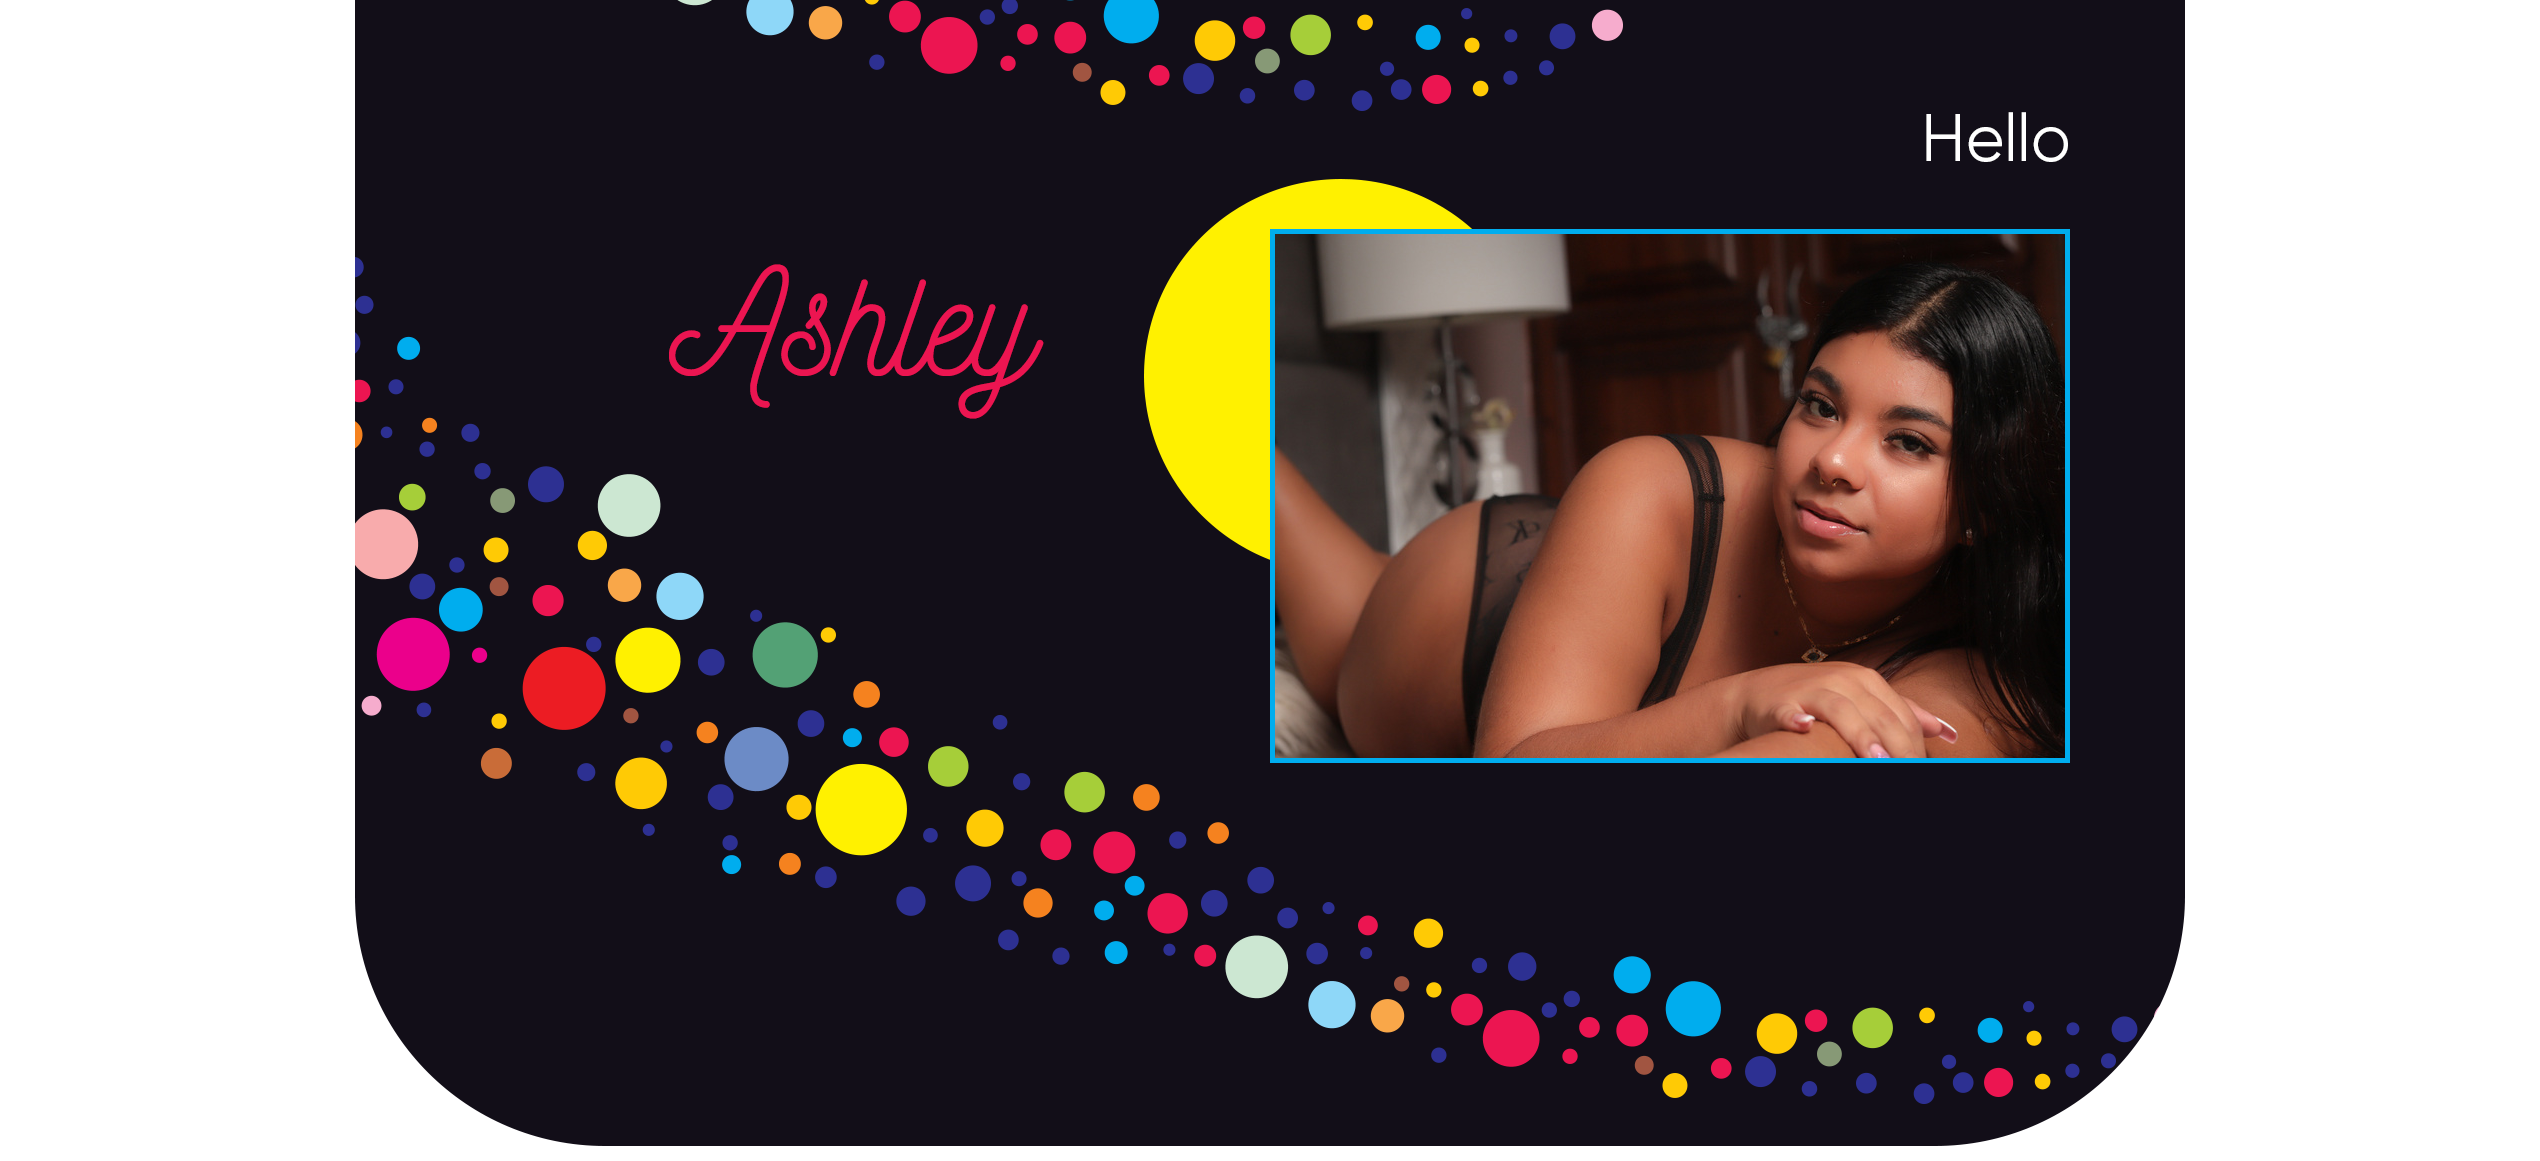 AshleyAdam Hi! Welcome to my page! image: 1